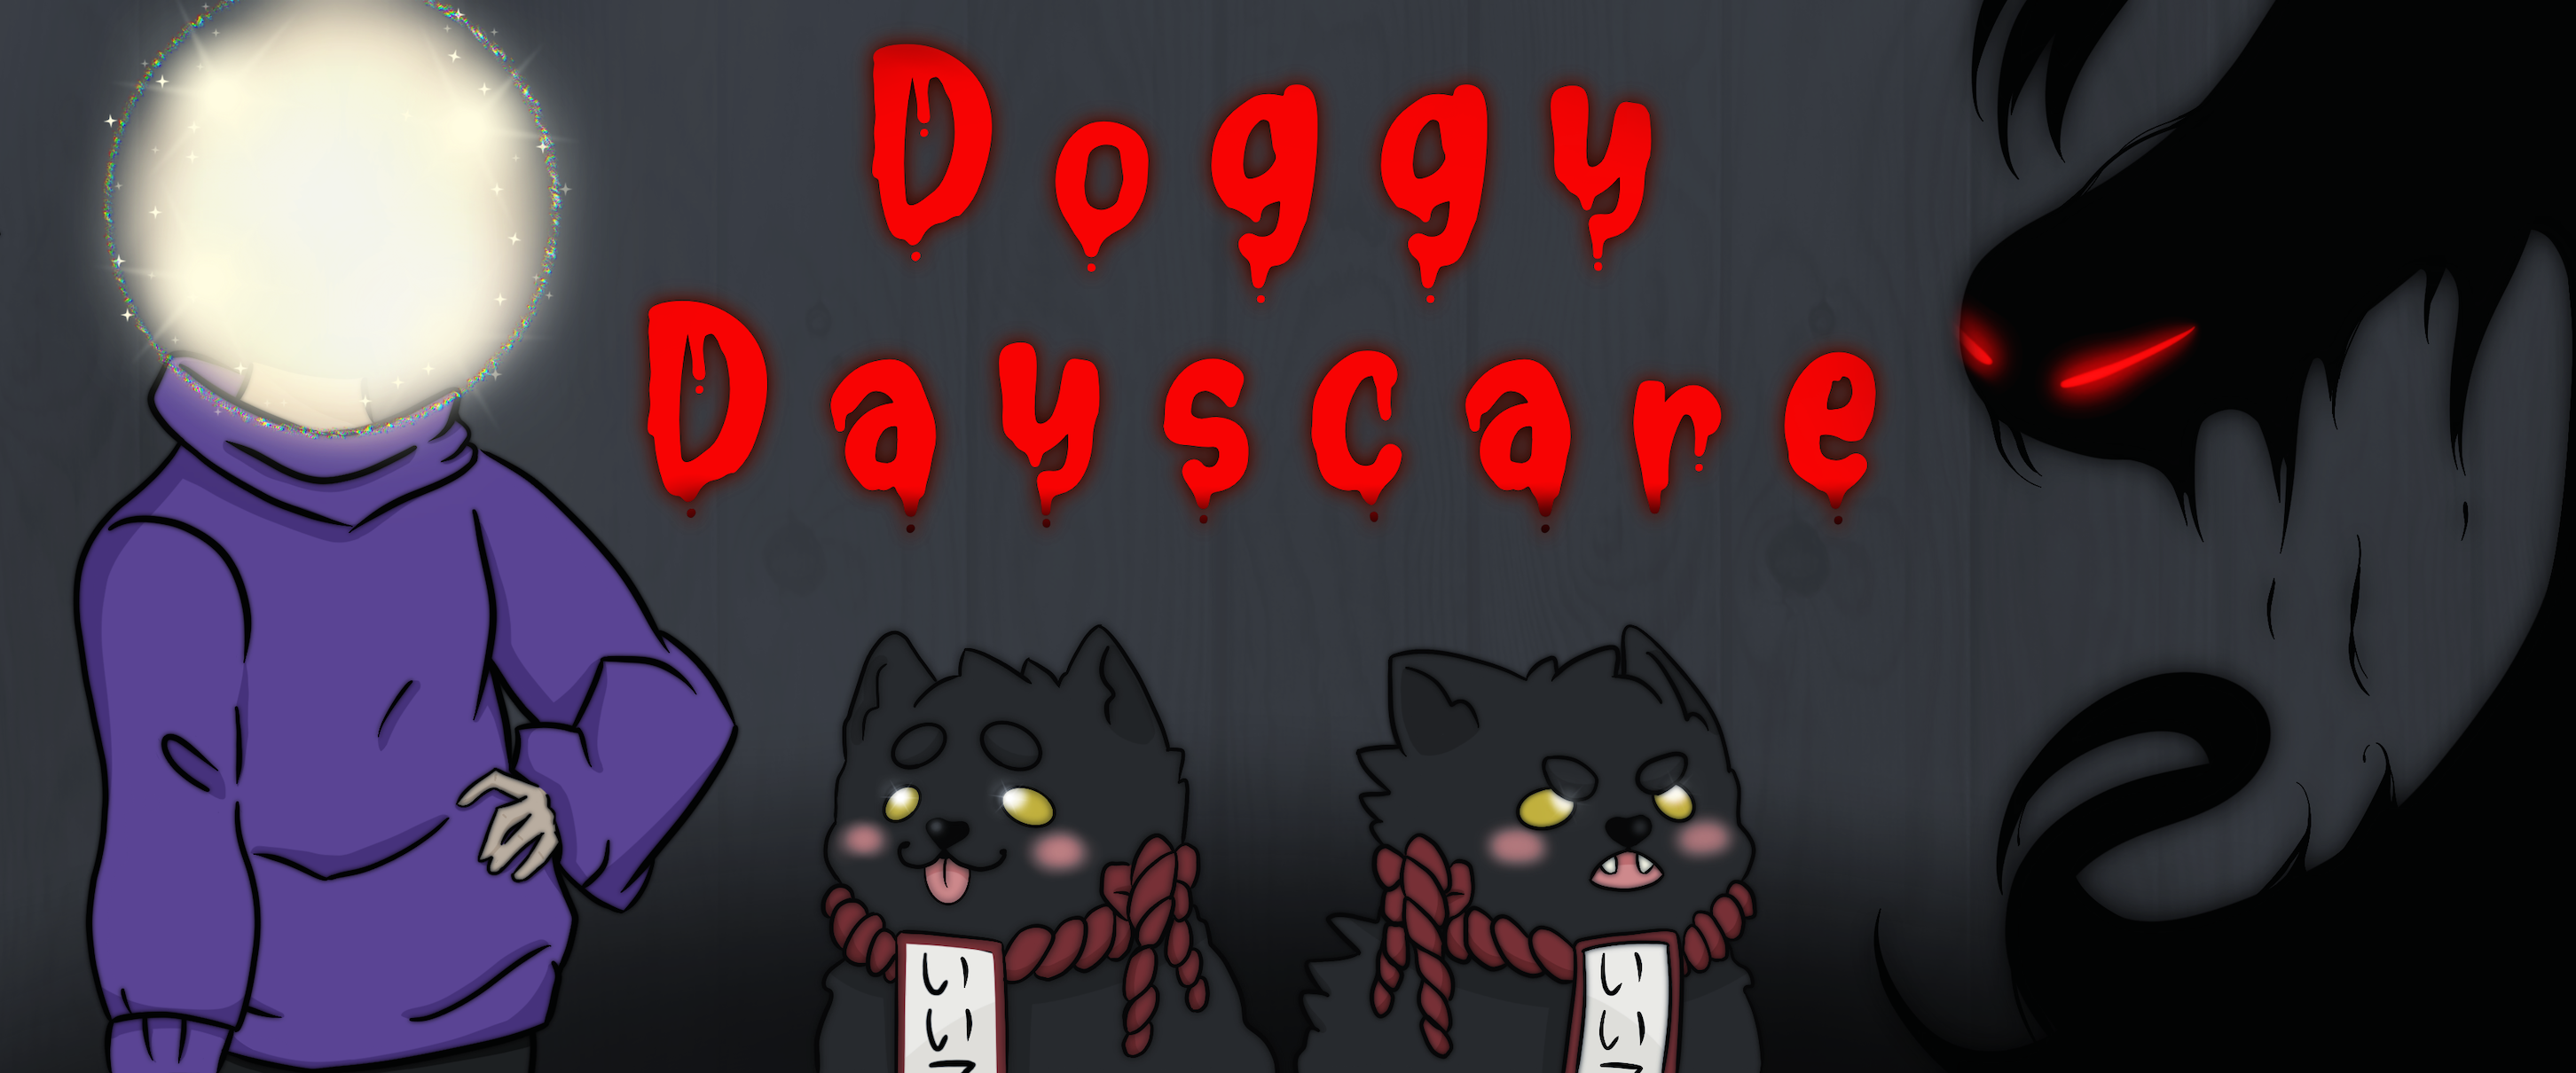 Doggy Dayscare